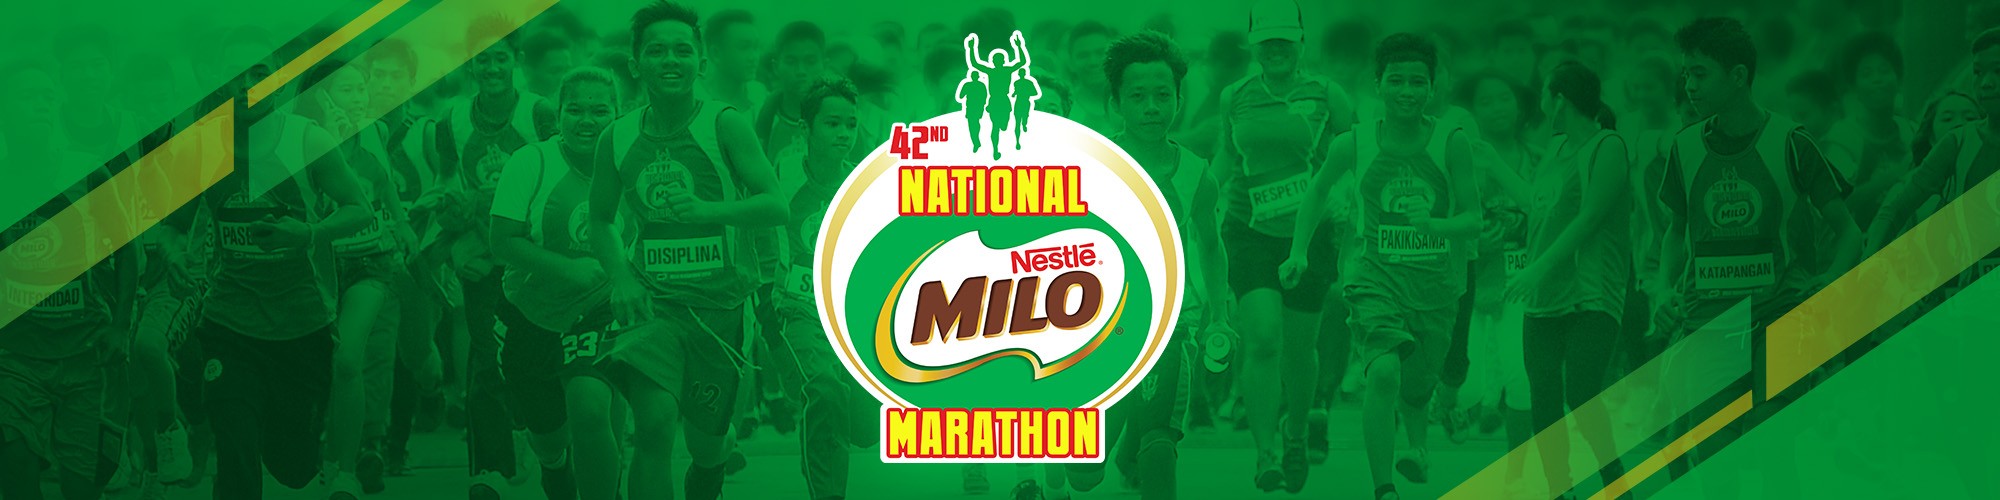 42nd National MILO Marathon - Batangas Leg